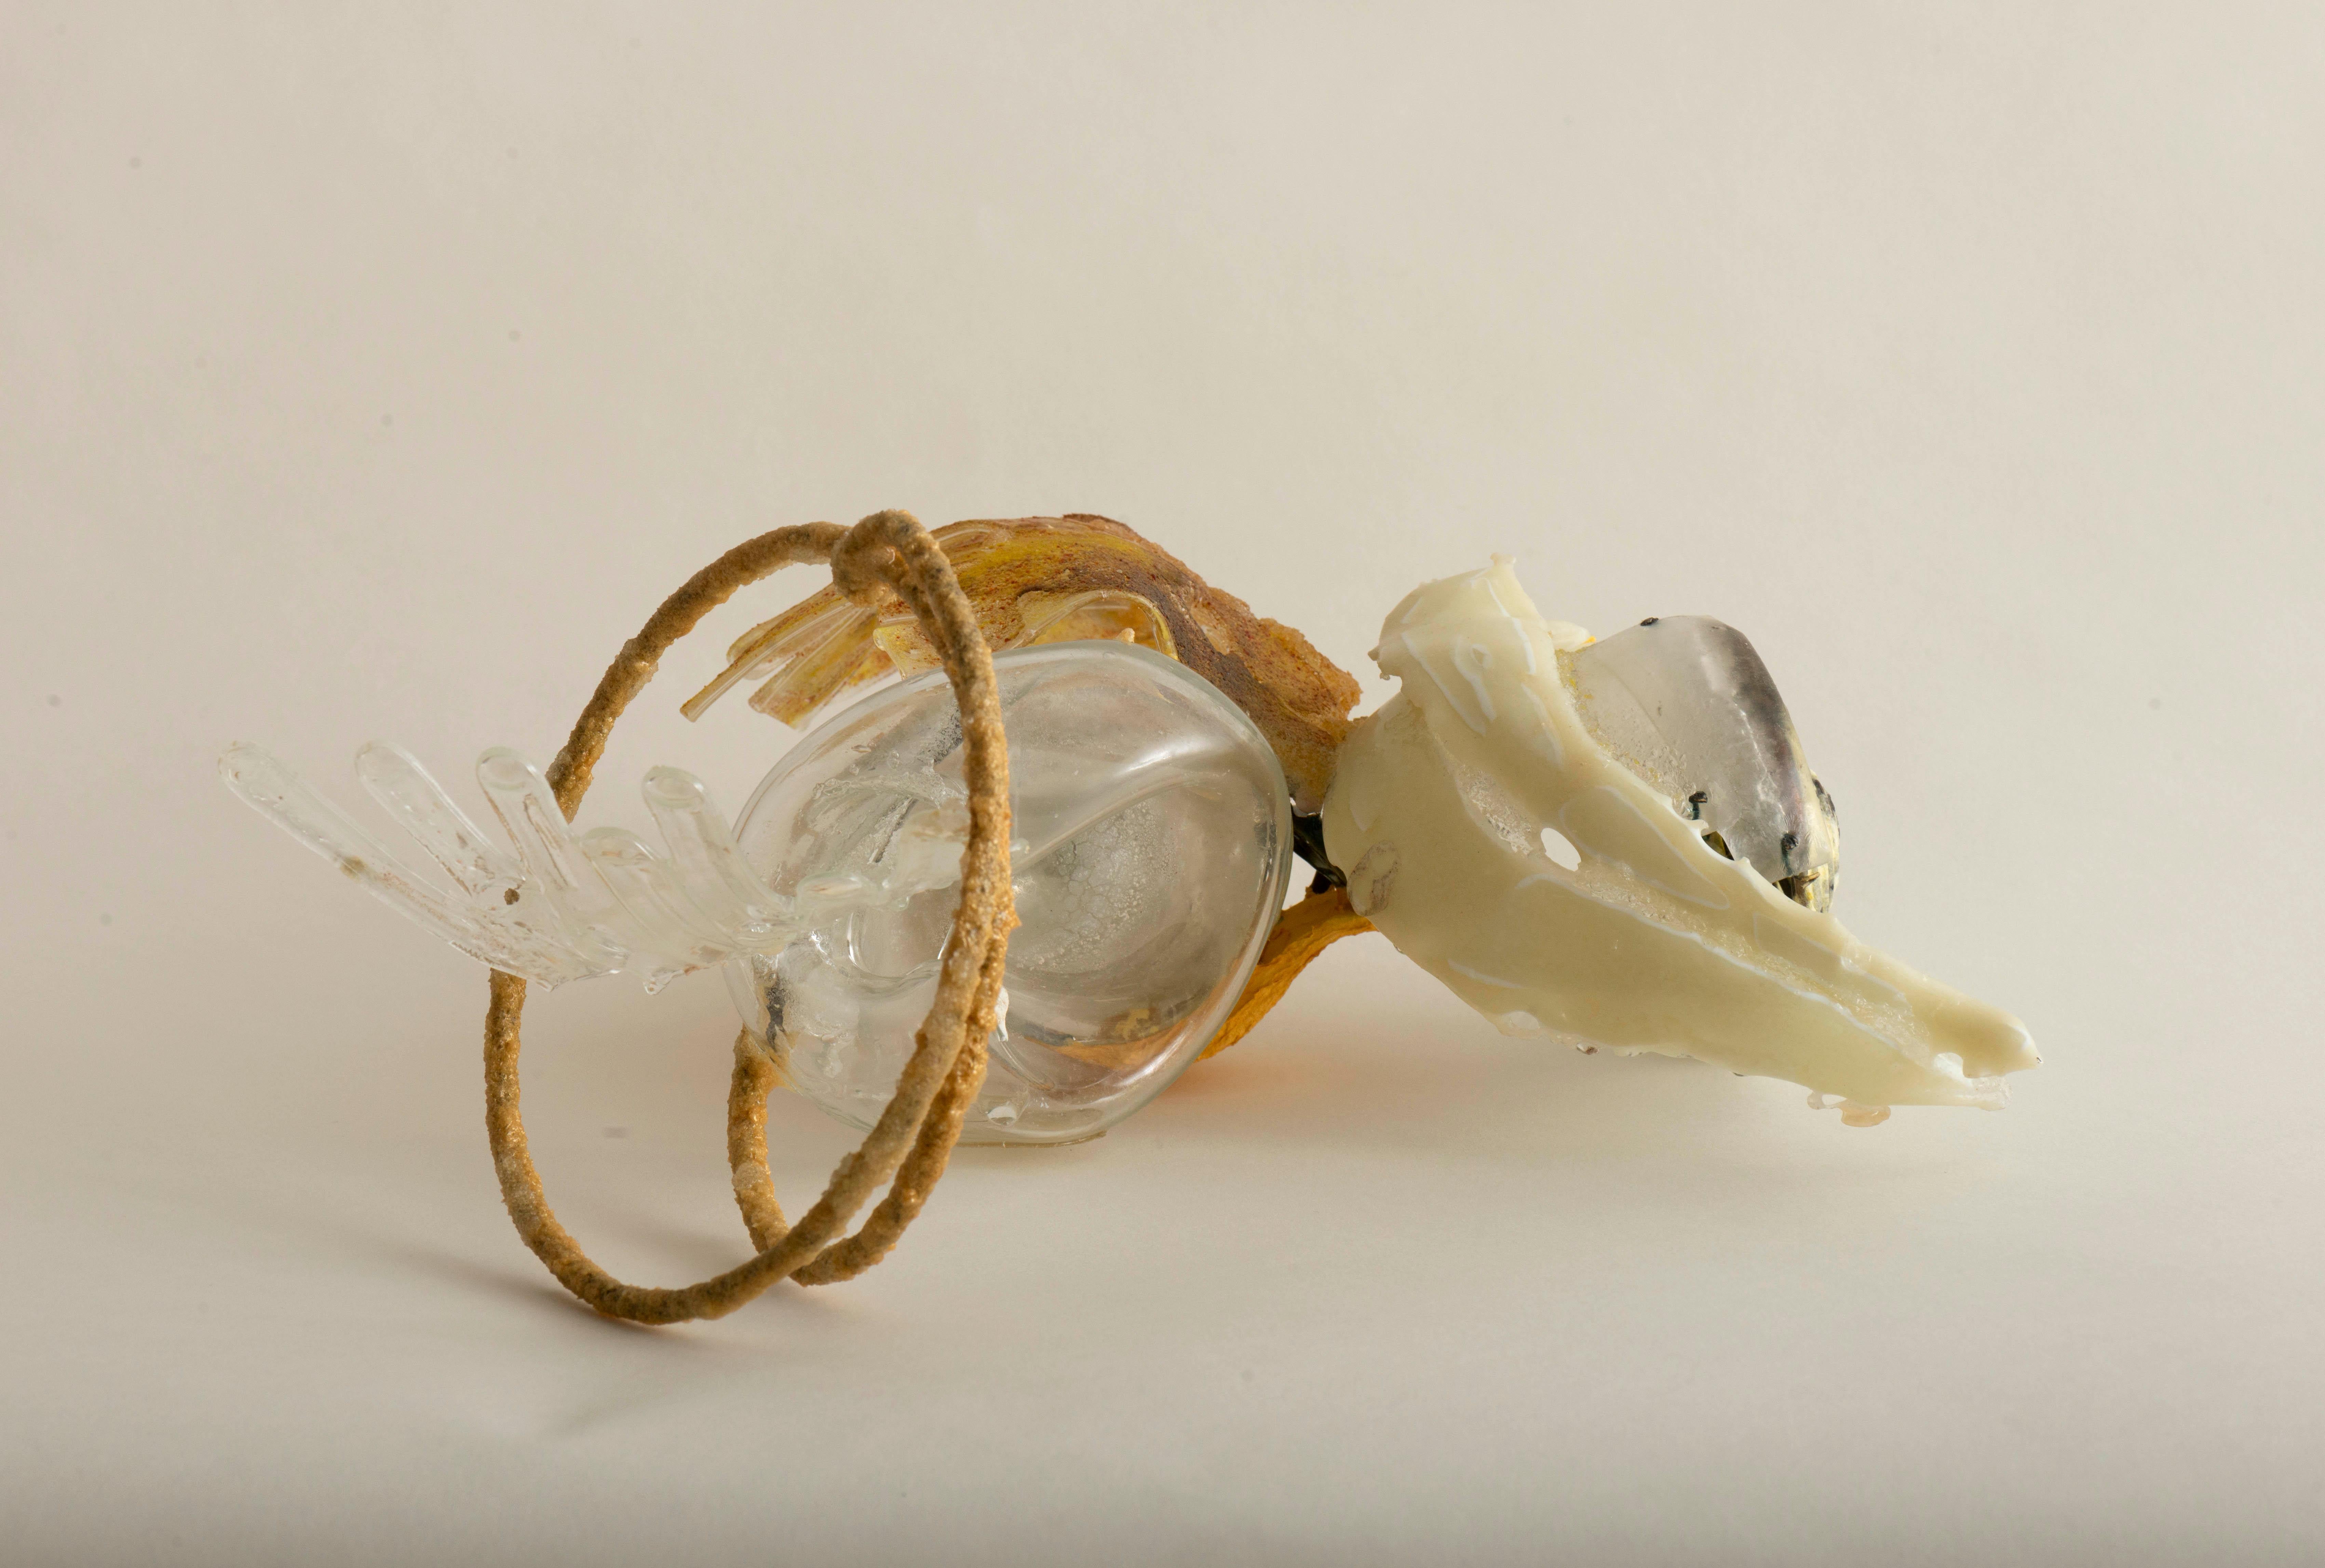 Nancy Cohen "Tilt a Whirl" - Abstract Sculpture of Glass and Handmade Paper